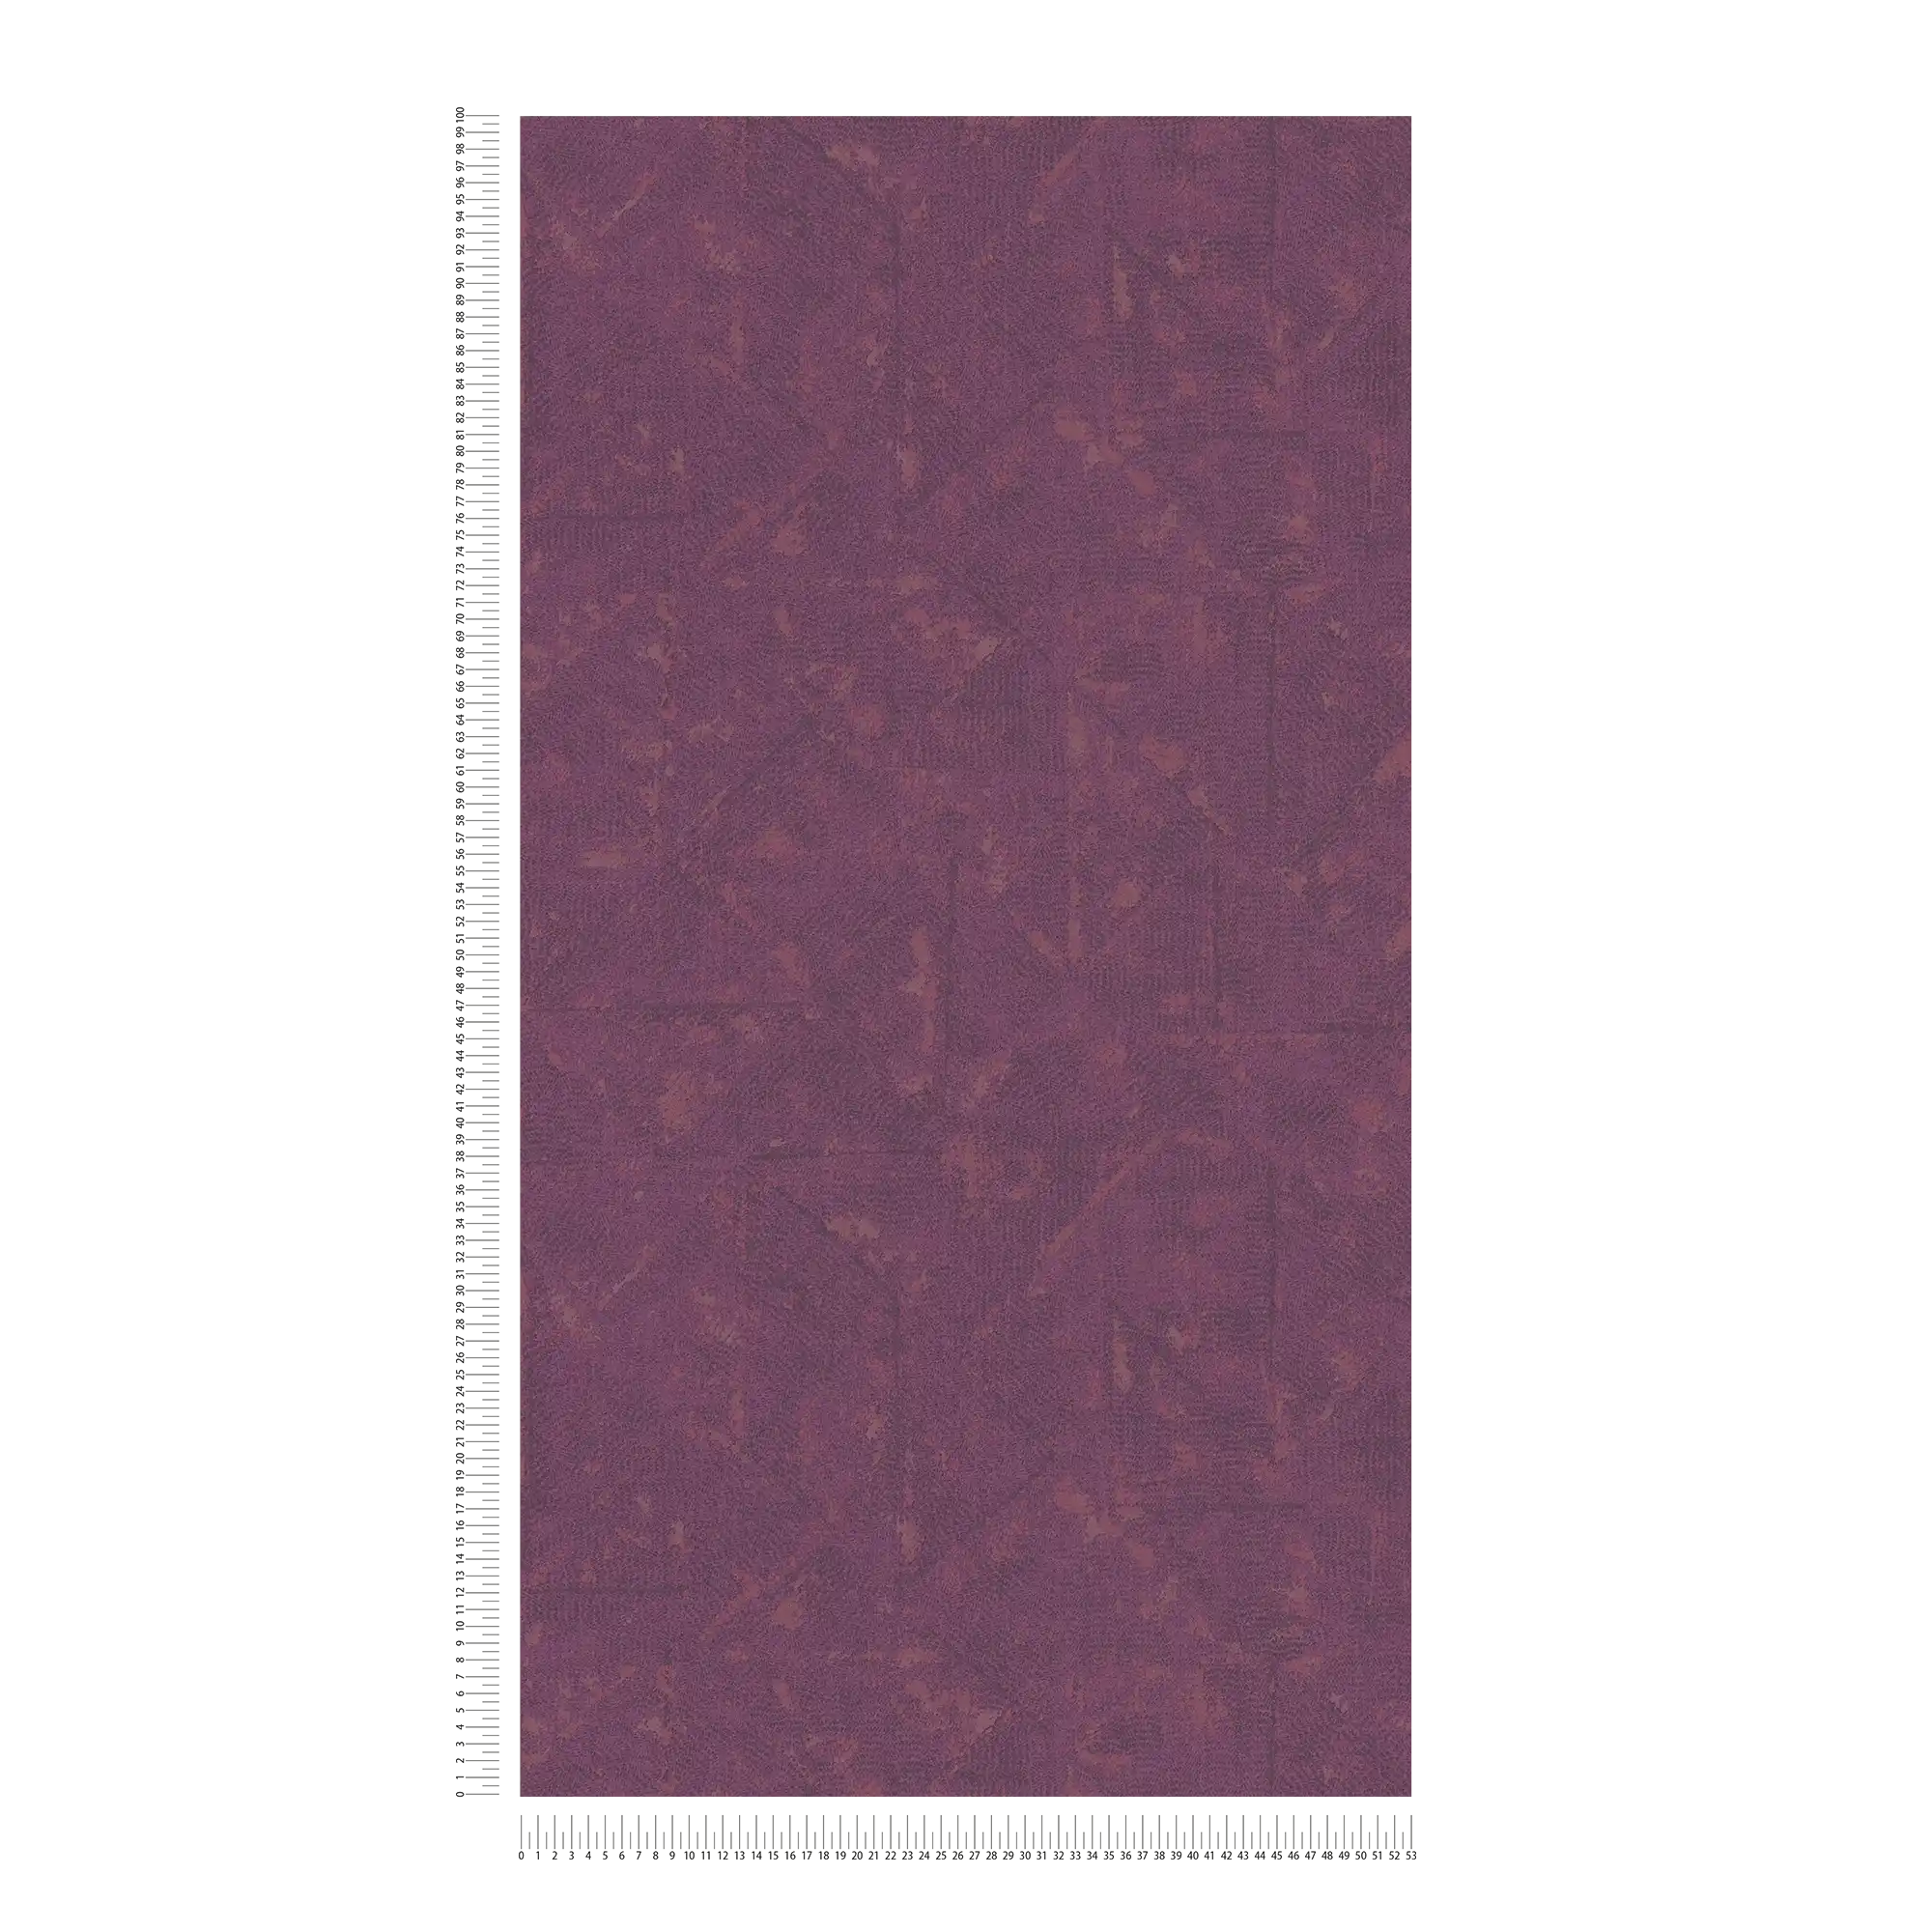             Carta da parati in tessuto non tessuto magenta con motivo asimmetrico - viola
        